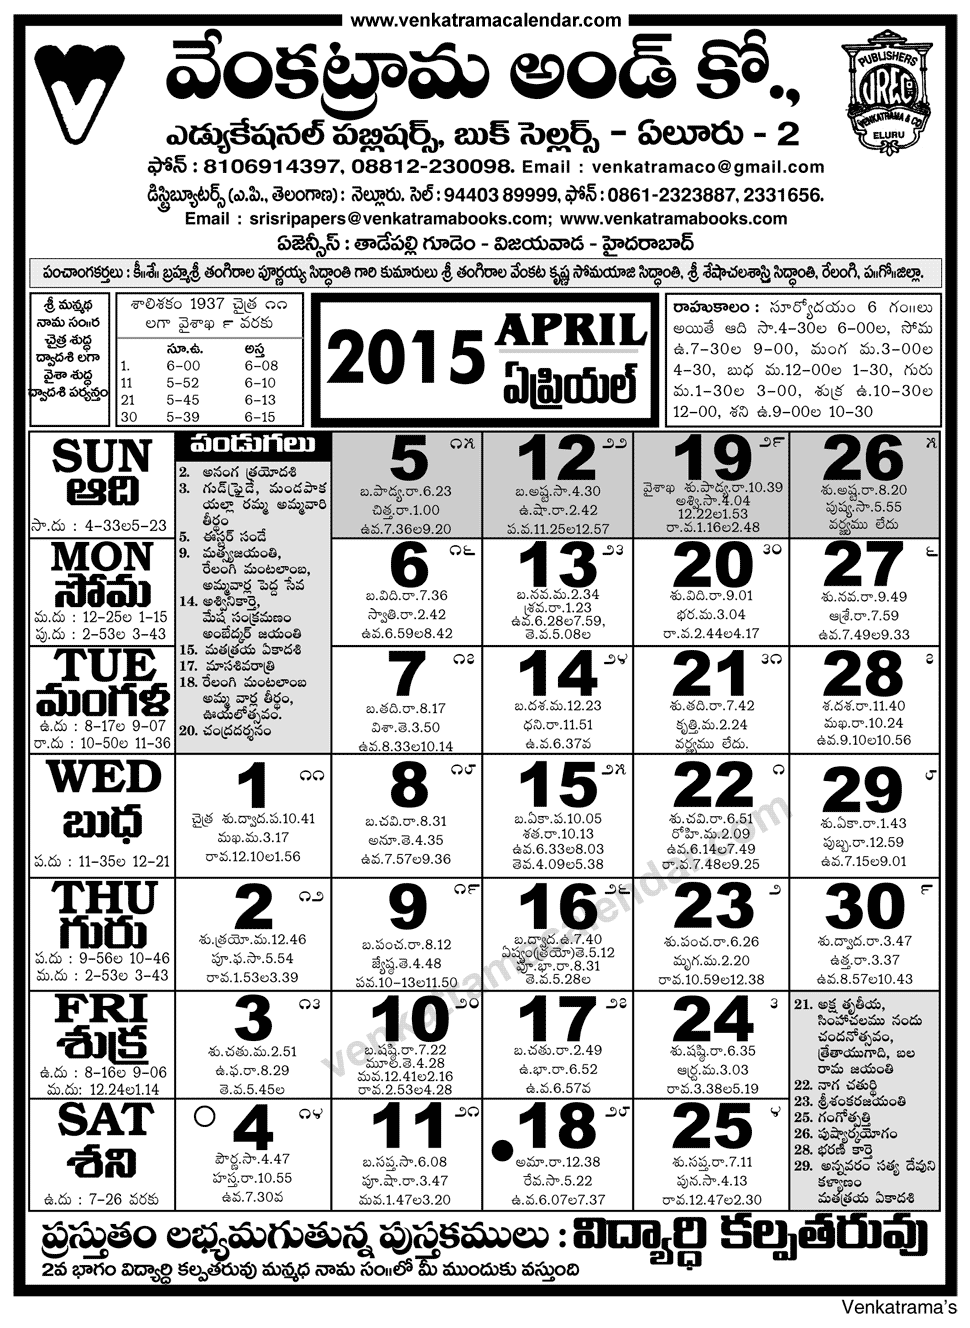 venkatrama-co-calendar-2014-venkatrama-co-2015-april-telugu-calendar